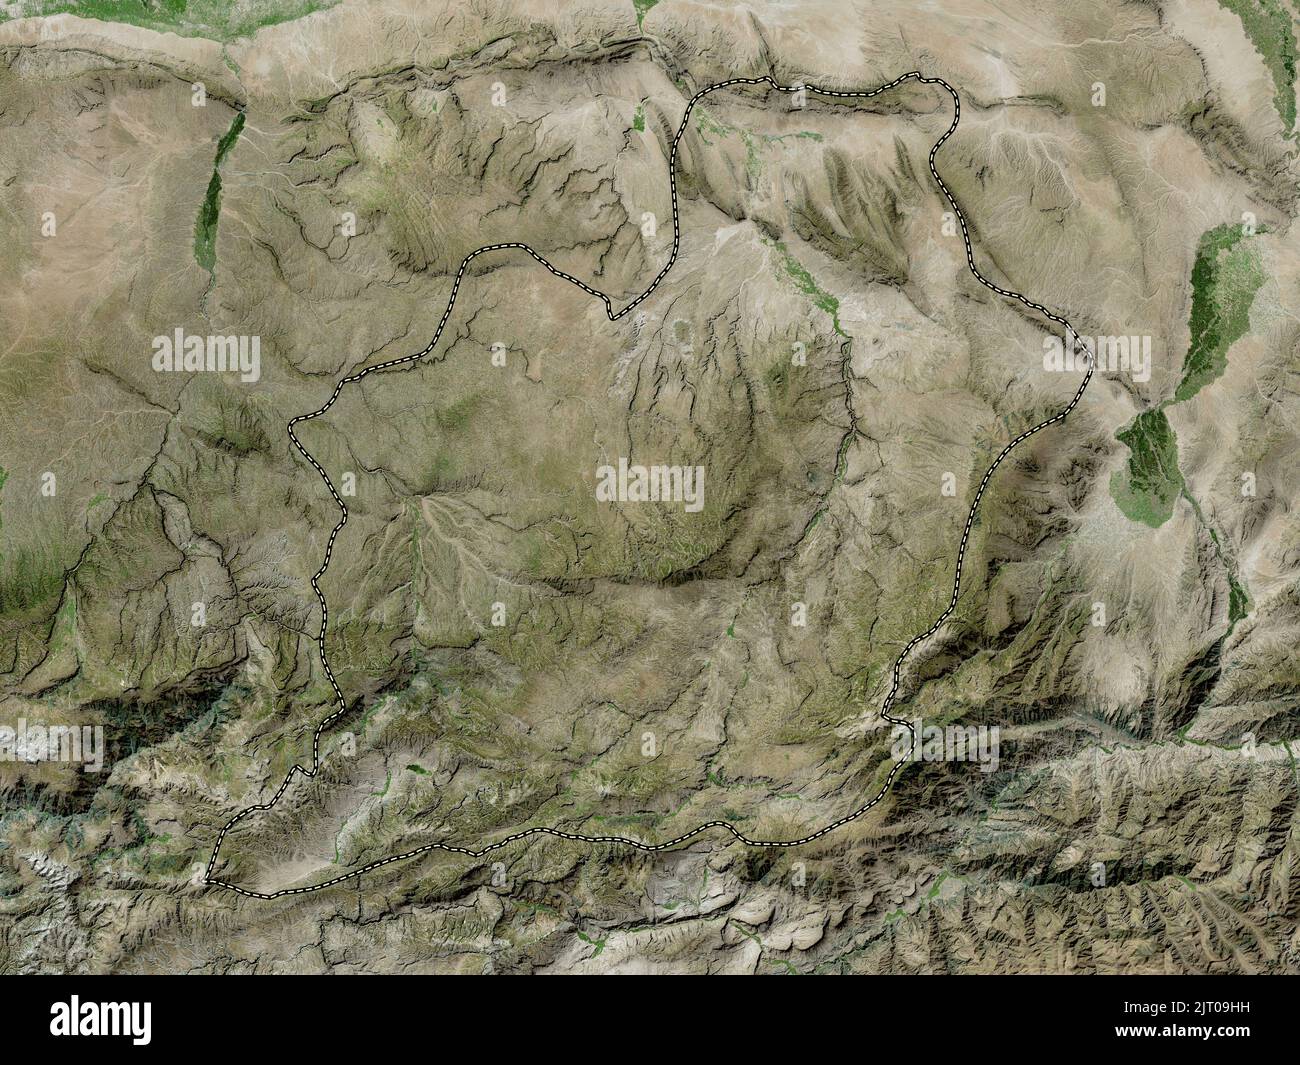 Samangan, province of Afghanistan. High resolution satellite map Stock Photo